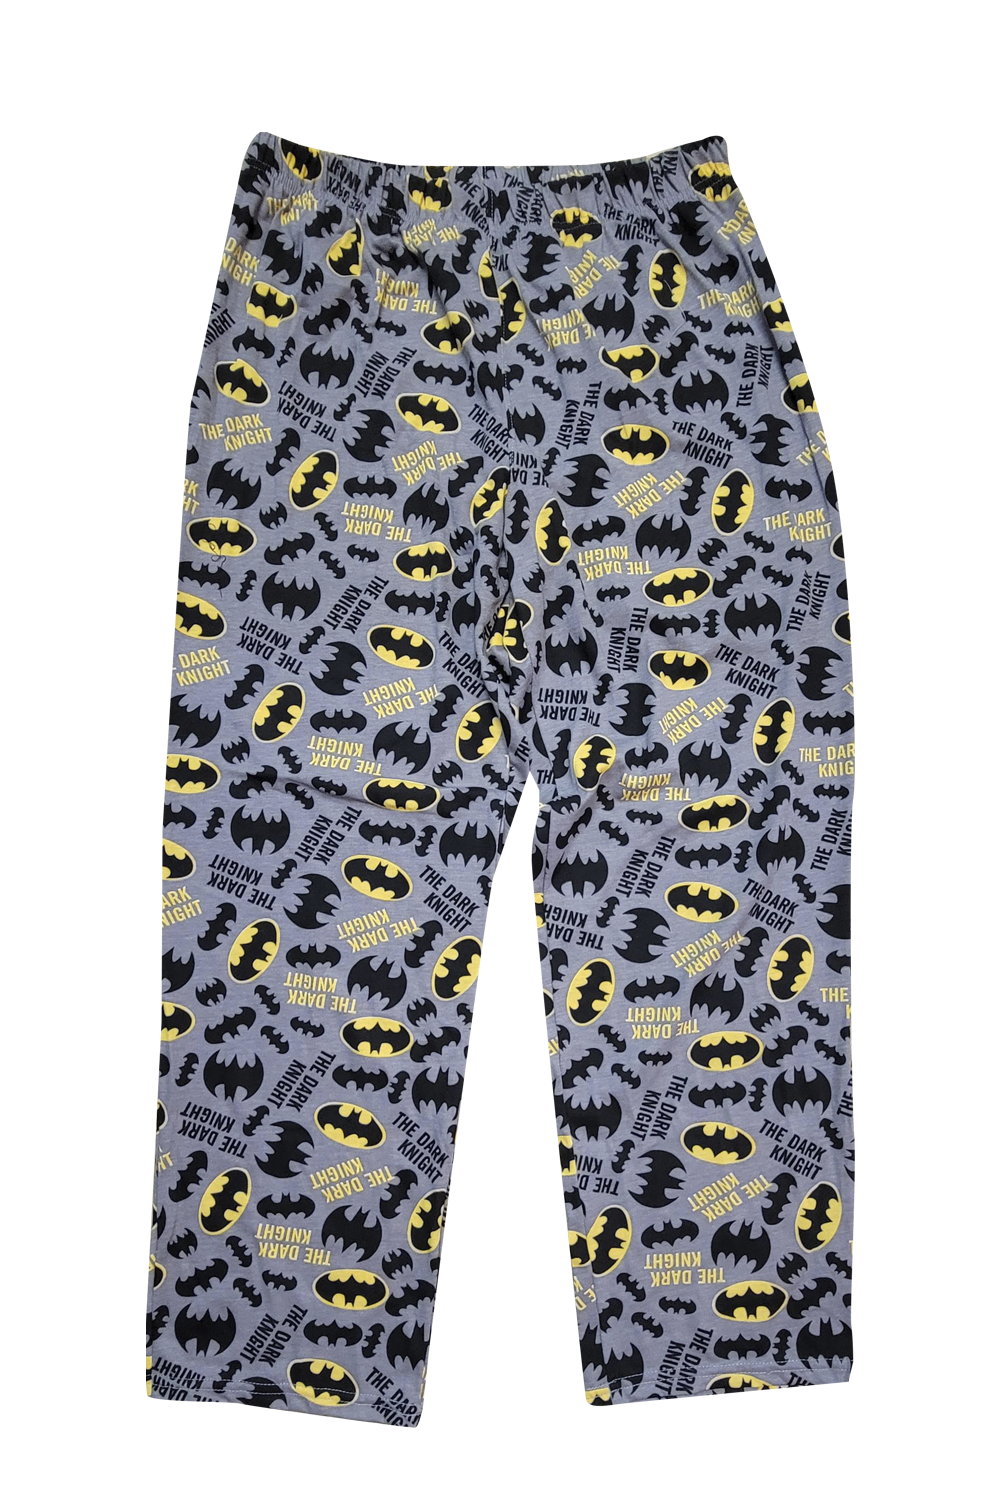 Pijama Caballero manga corta. Batman